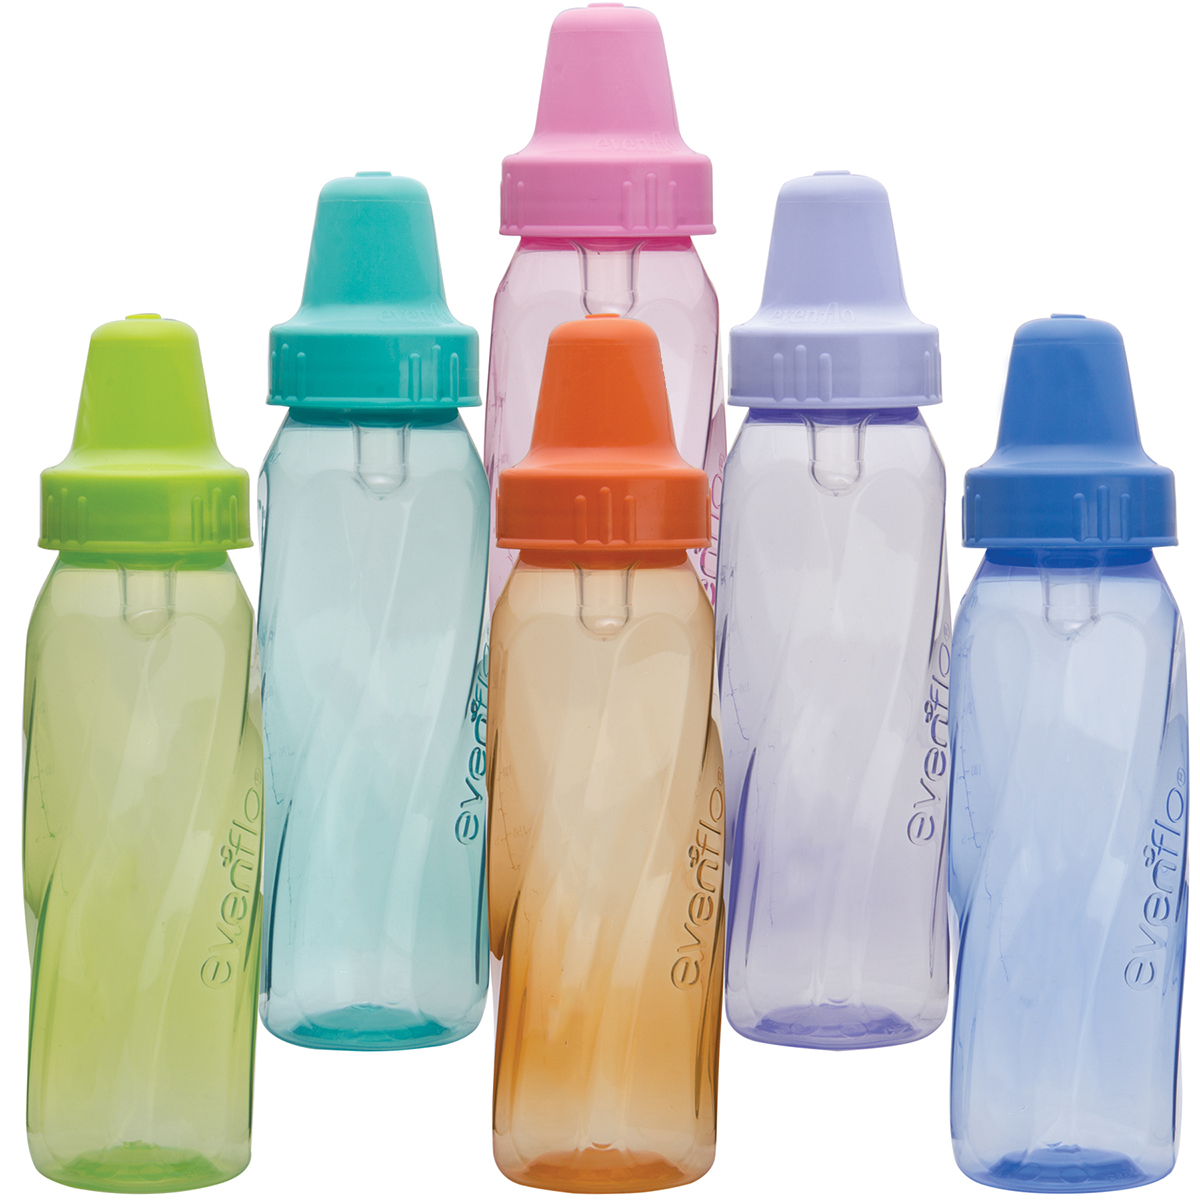 Assorted Color Evenflo Baby Bottles 8 oz